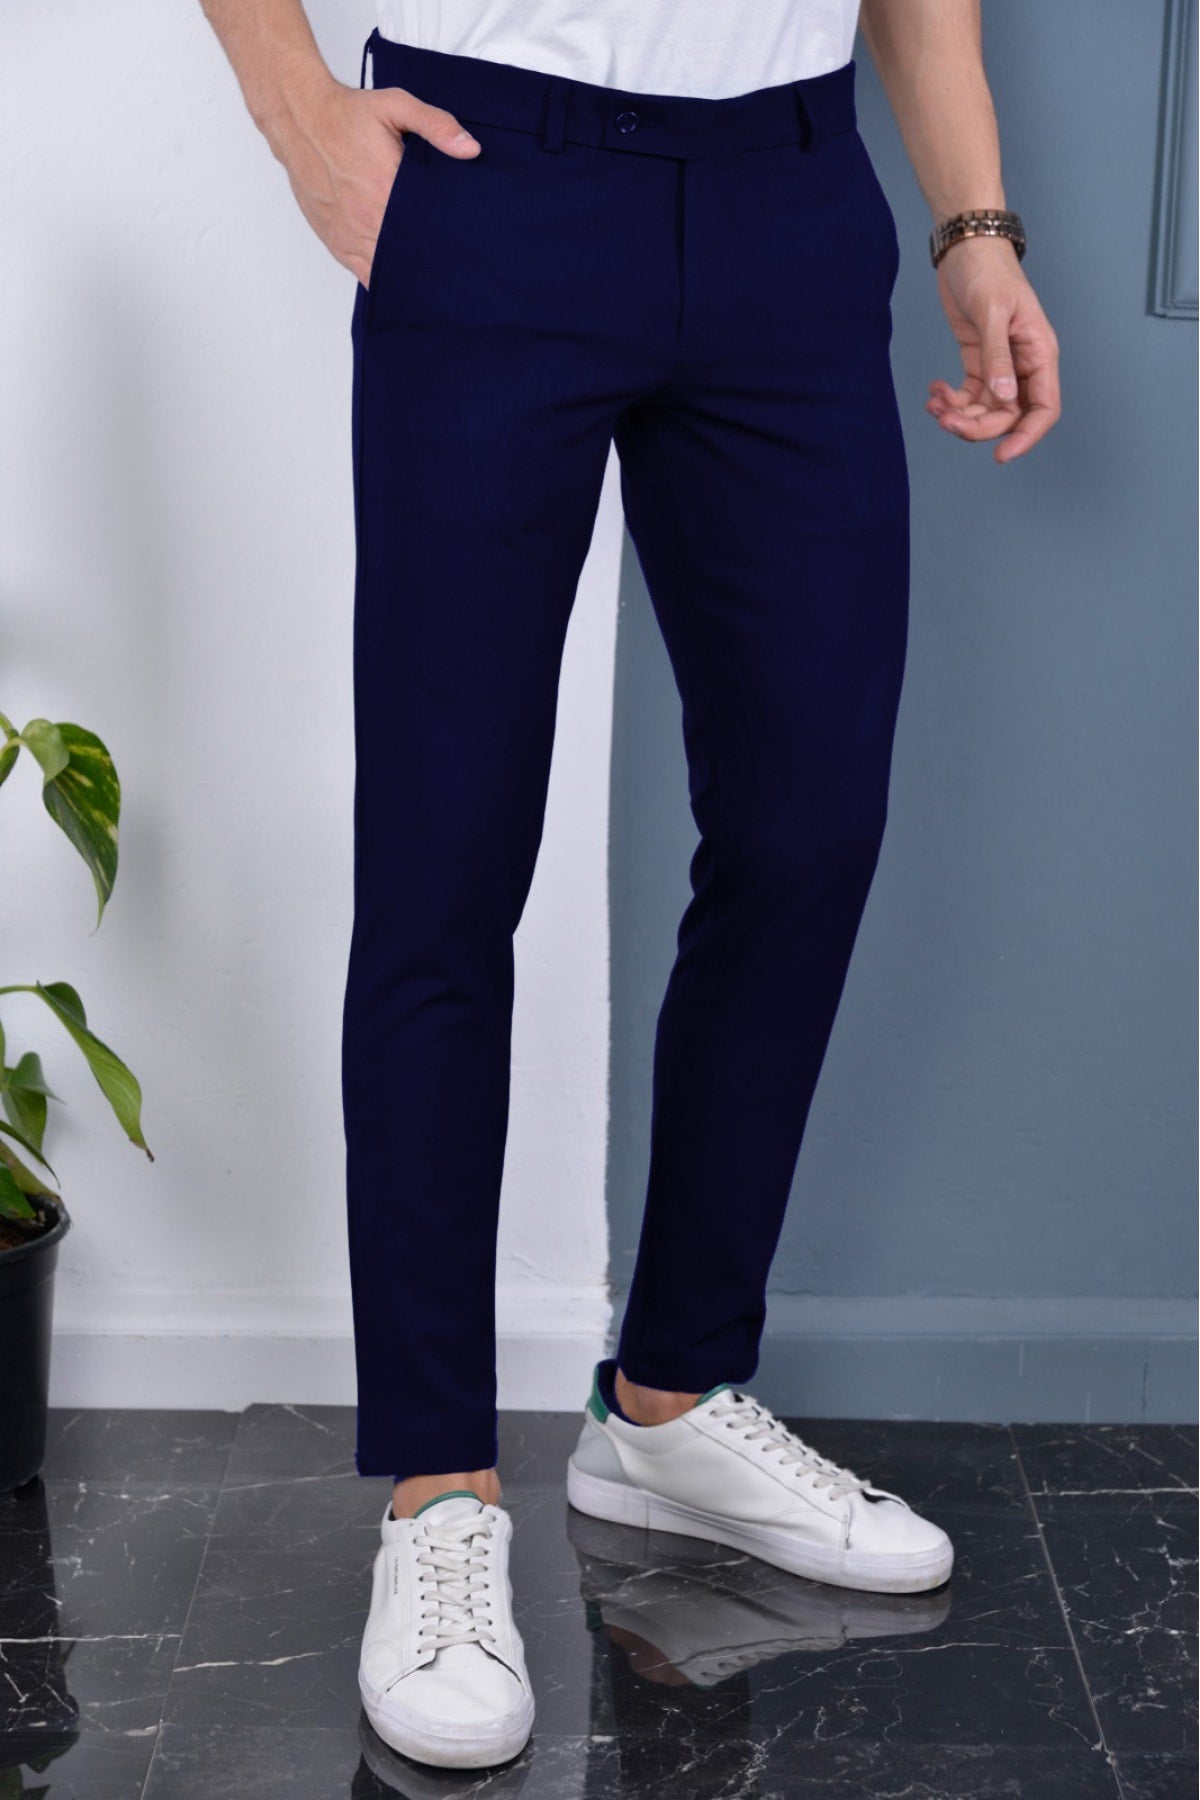 Men's Navy Blue Color Italian Cut Quality Flexible Lycra Fabric Ankle Length Trousers